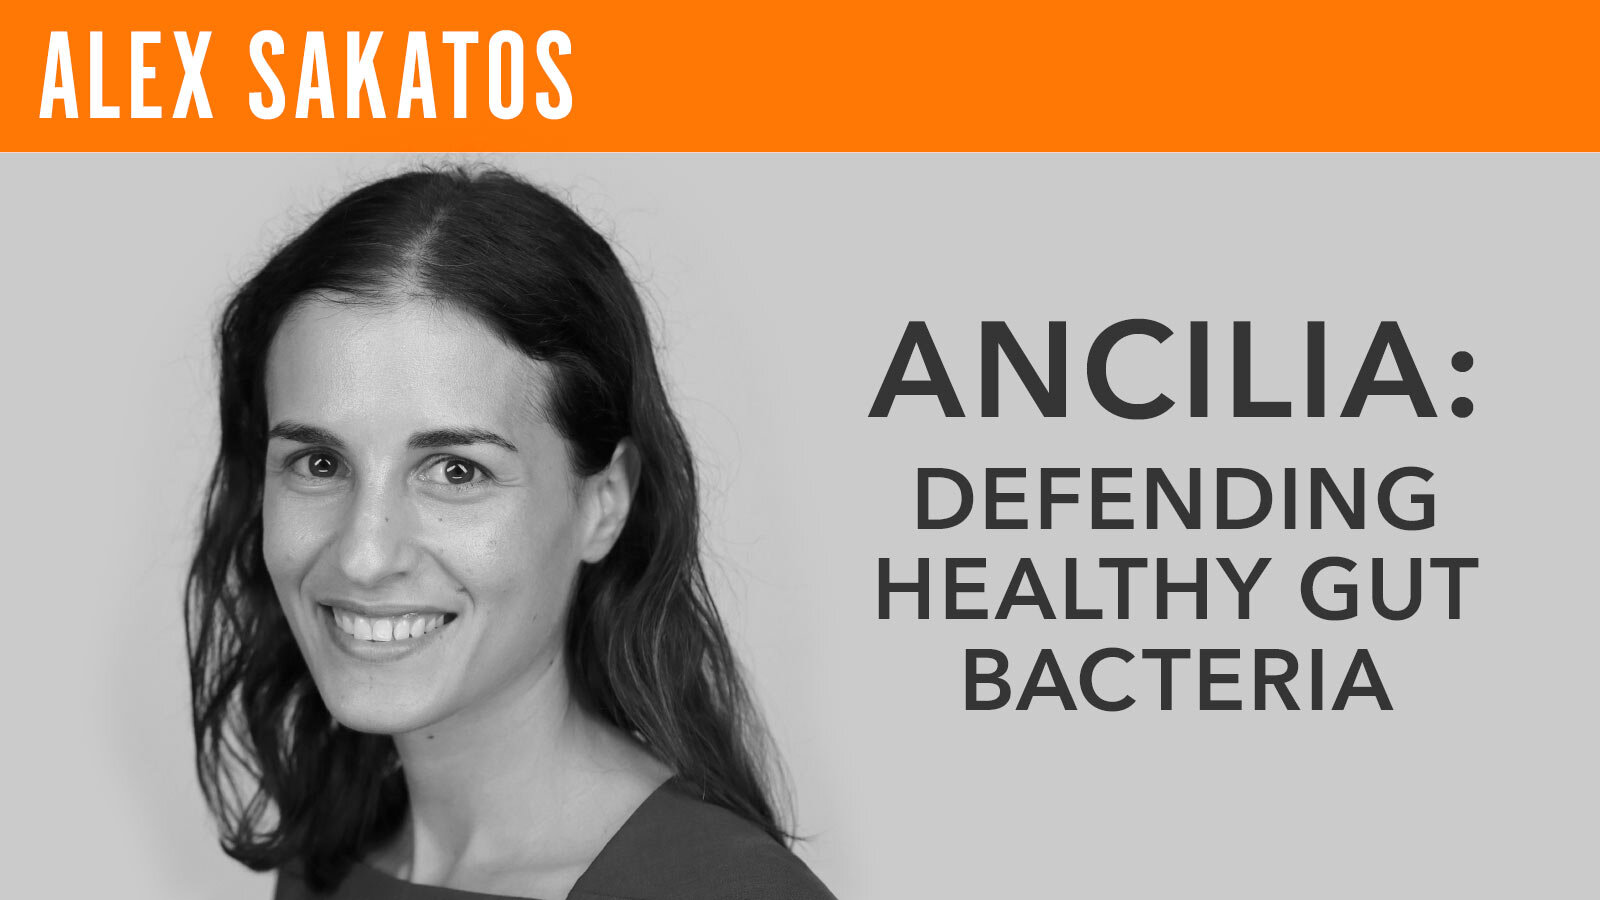 Alex Sakatos, "Ancilia: Defending Healthy Gut Bacteria"